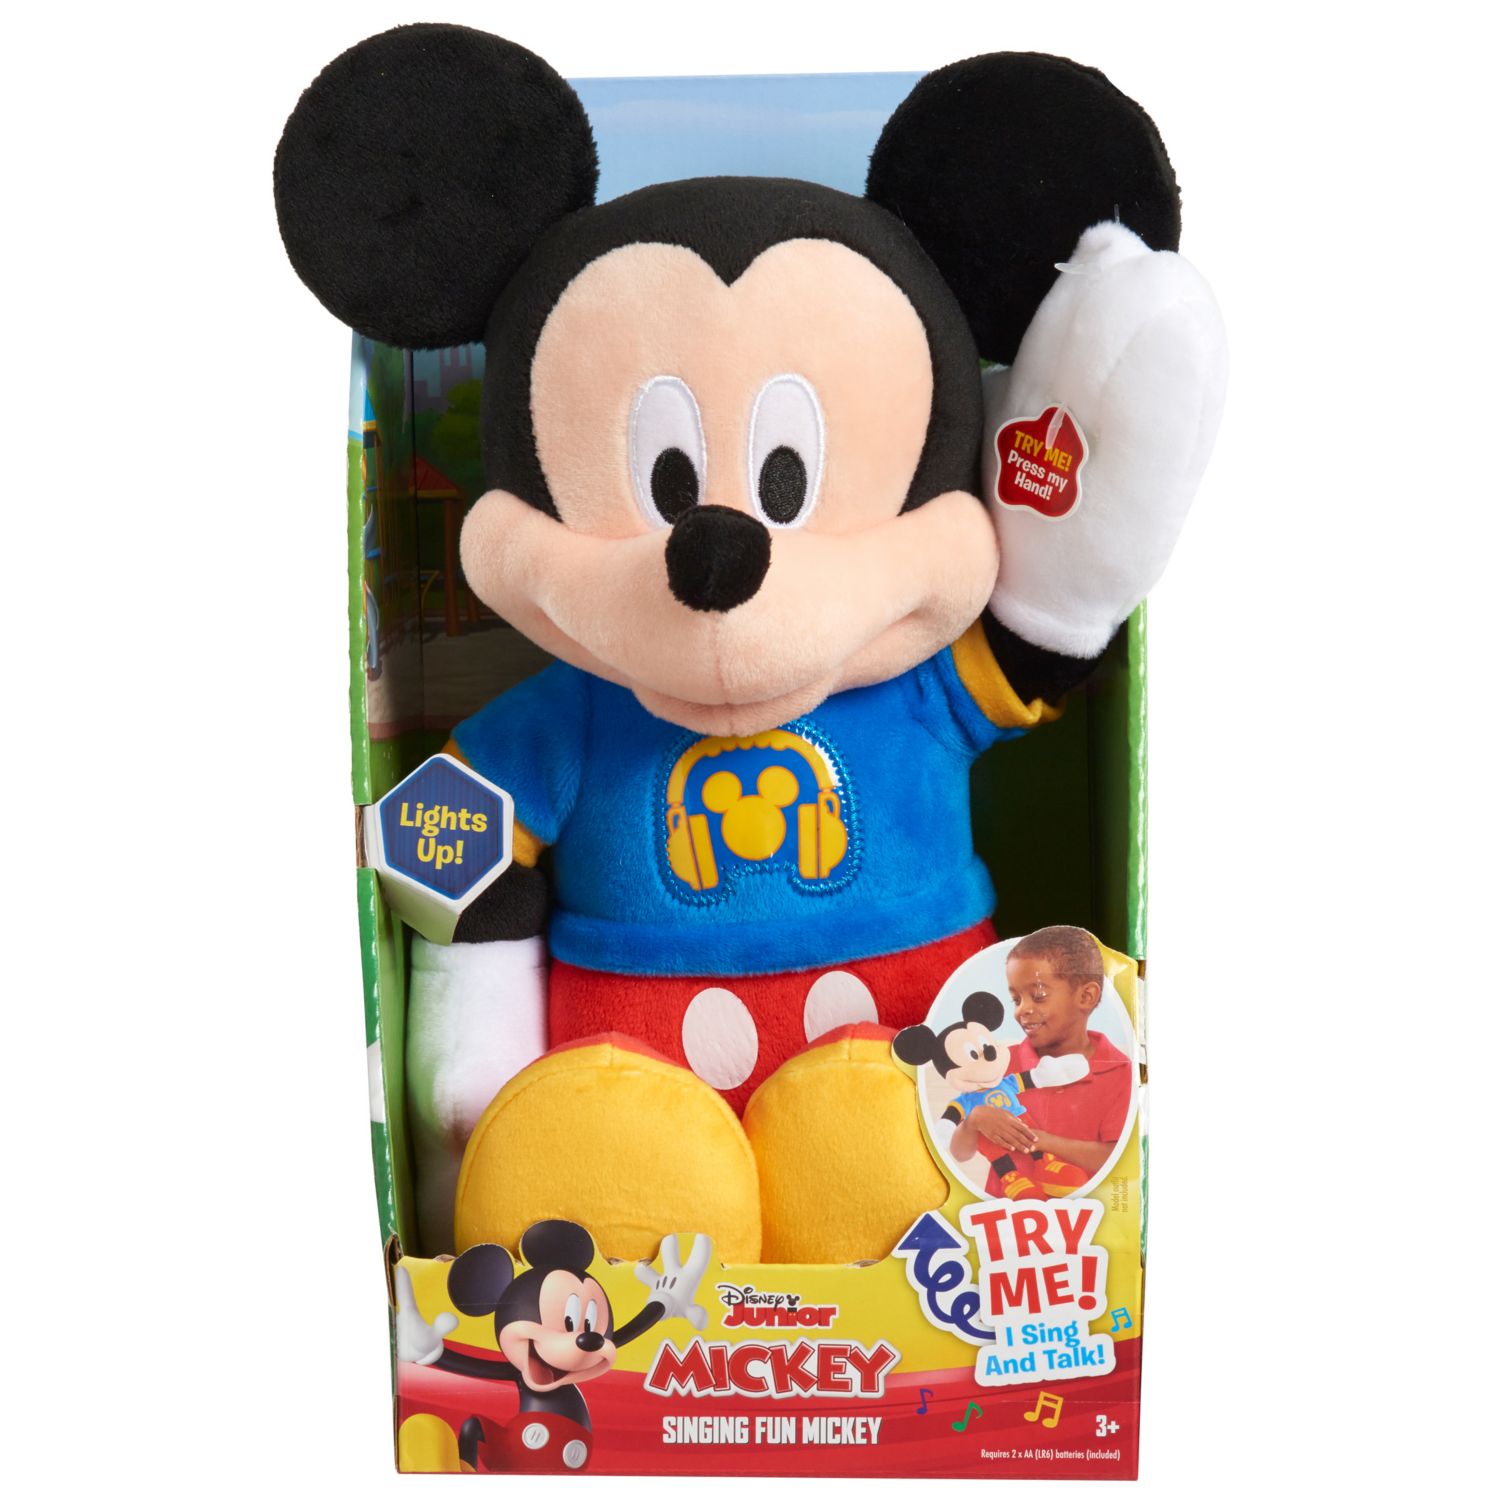 plush mickey mouse